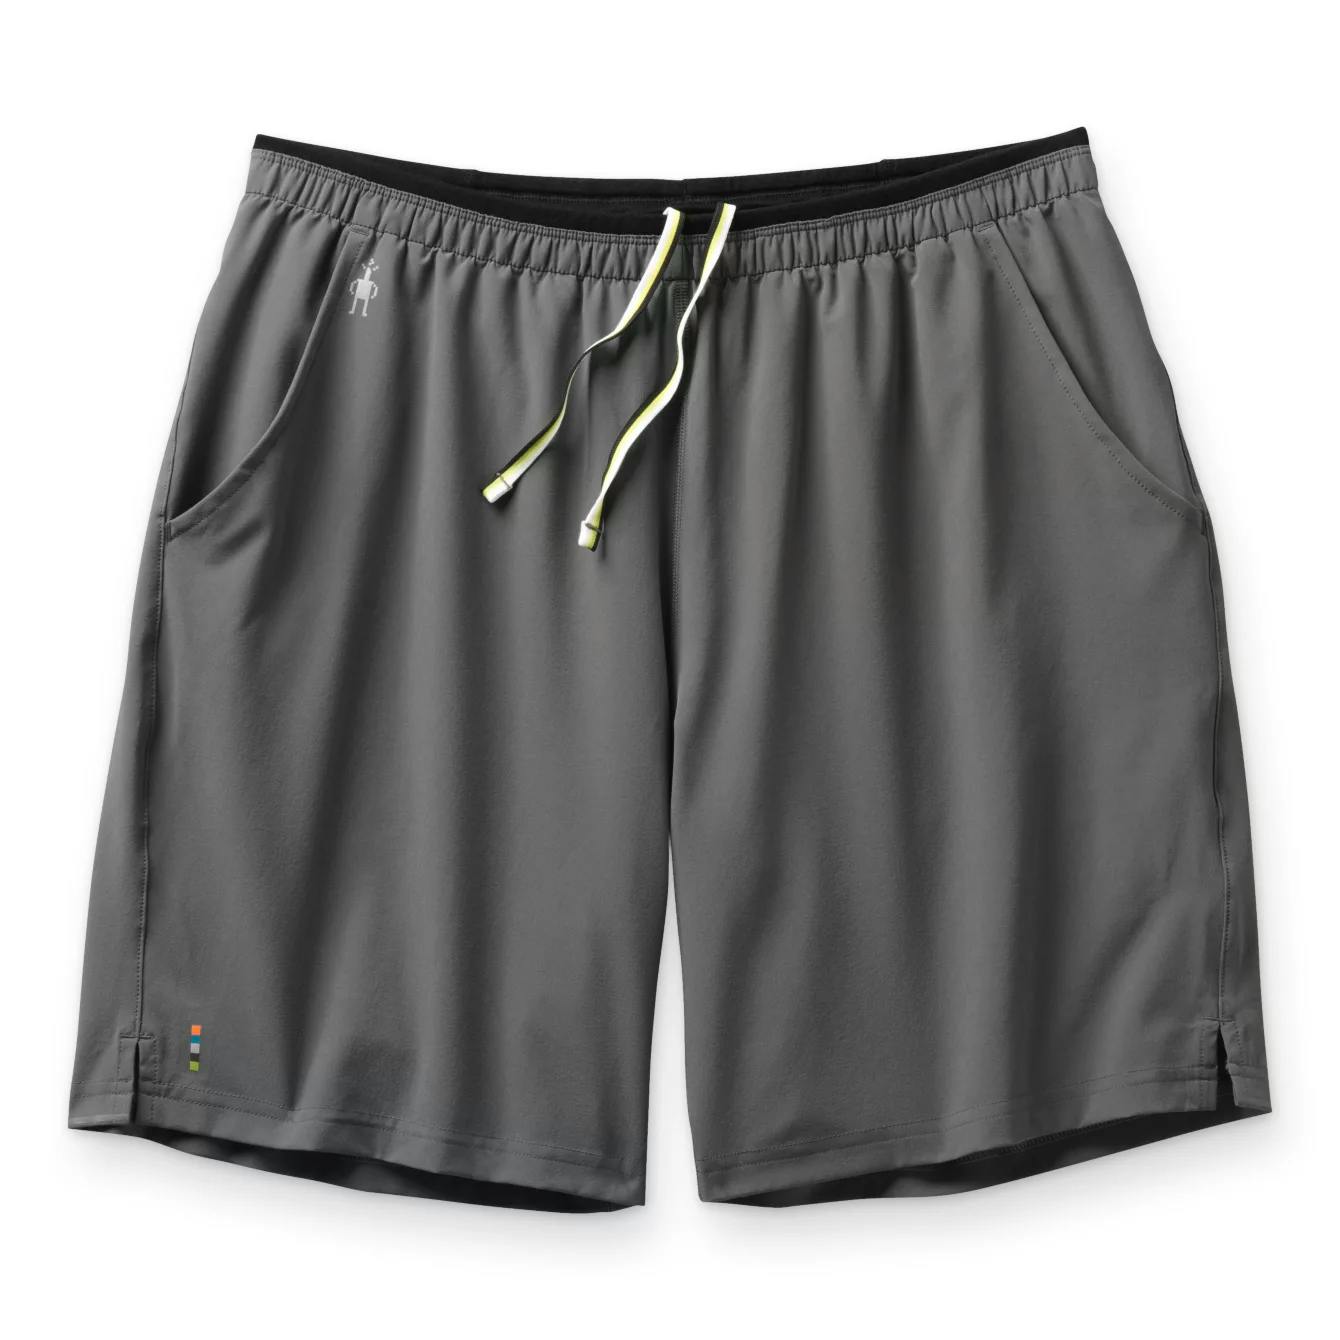 Smartwool Men's Merino Sport Lined Shorts